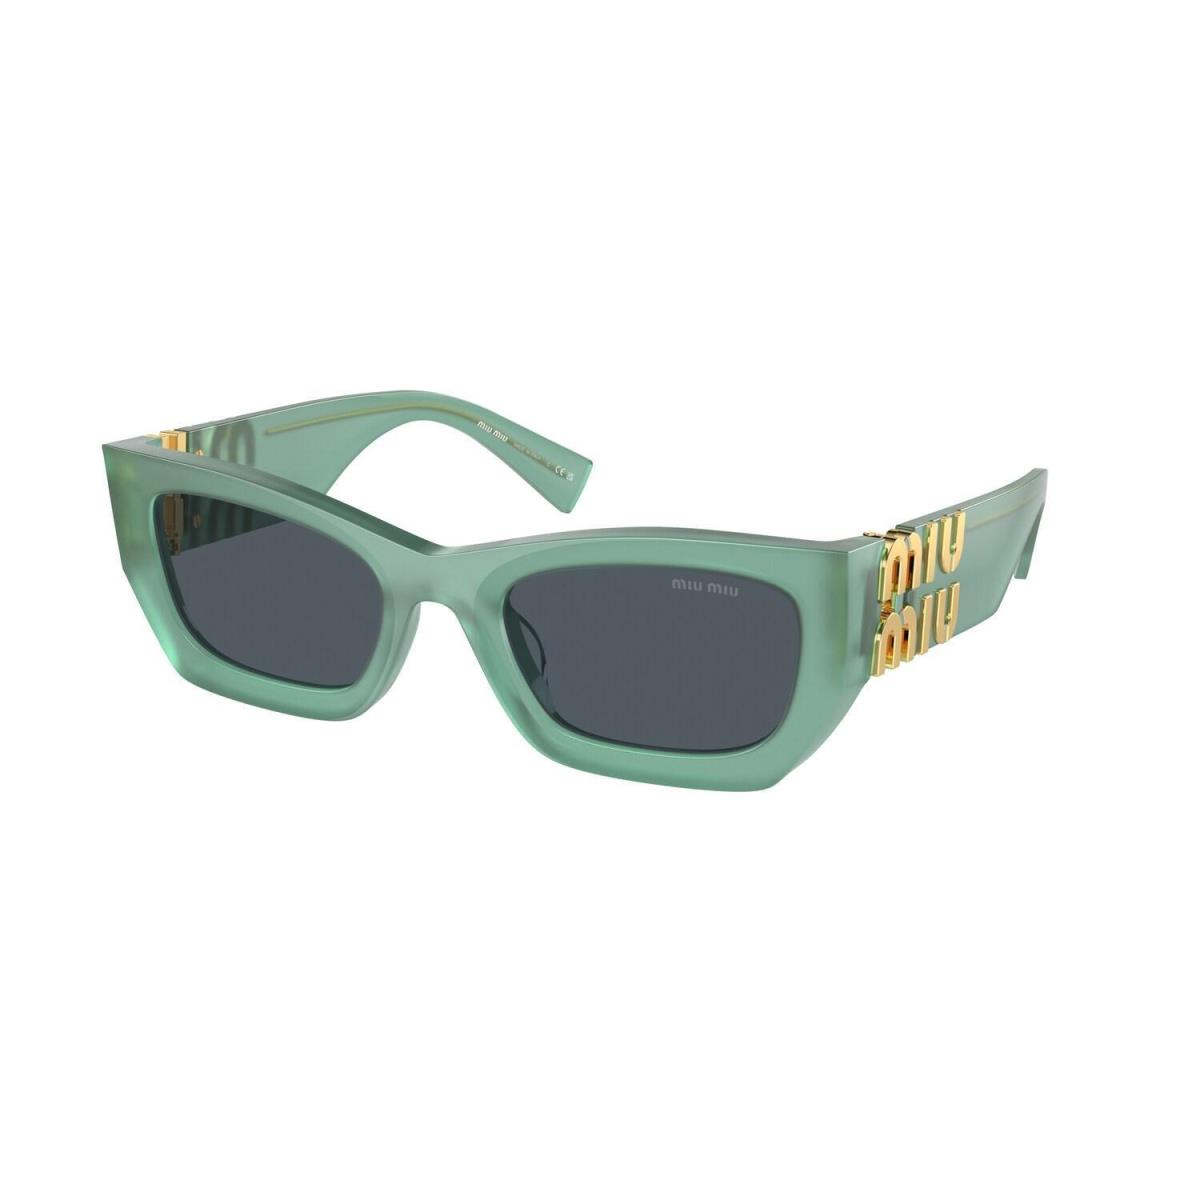 Miu Miu 09WS Sunglasses 19L09T Green